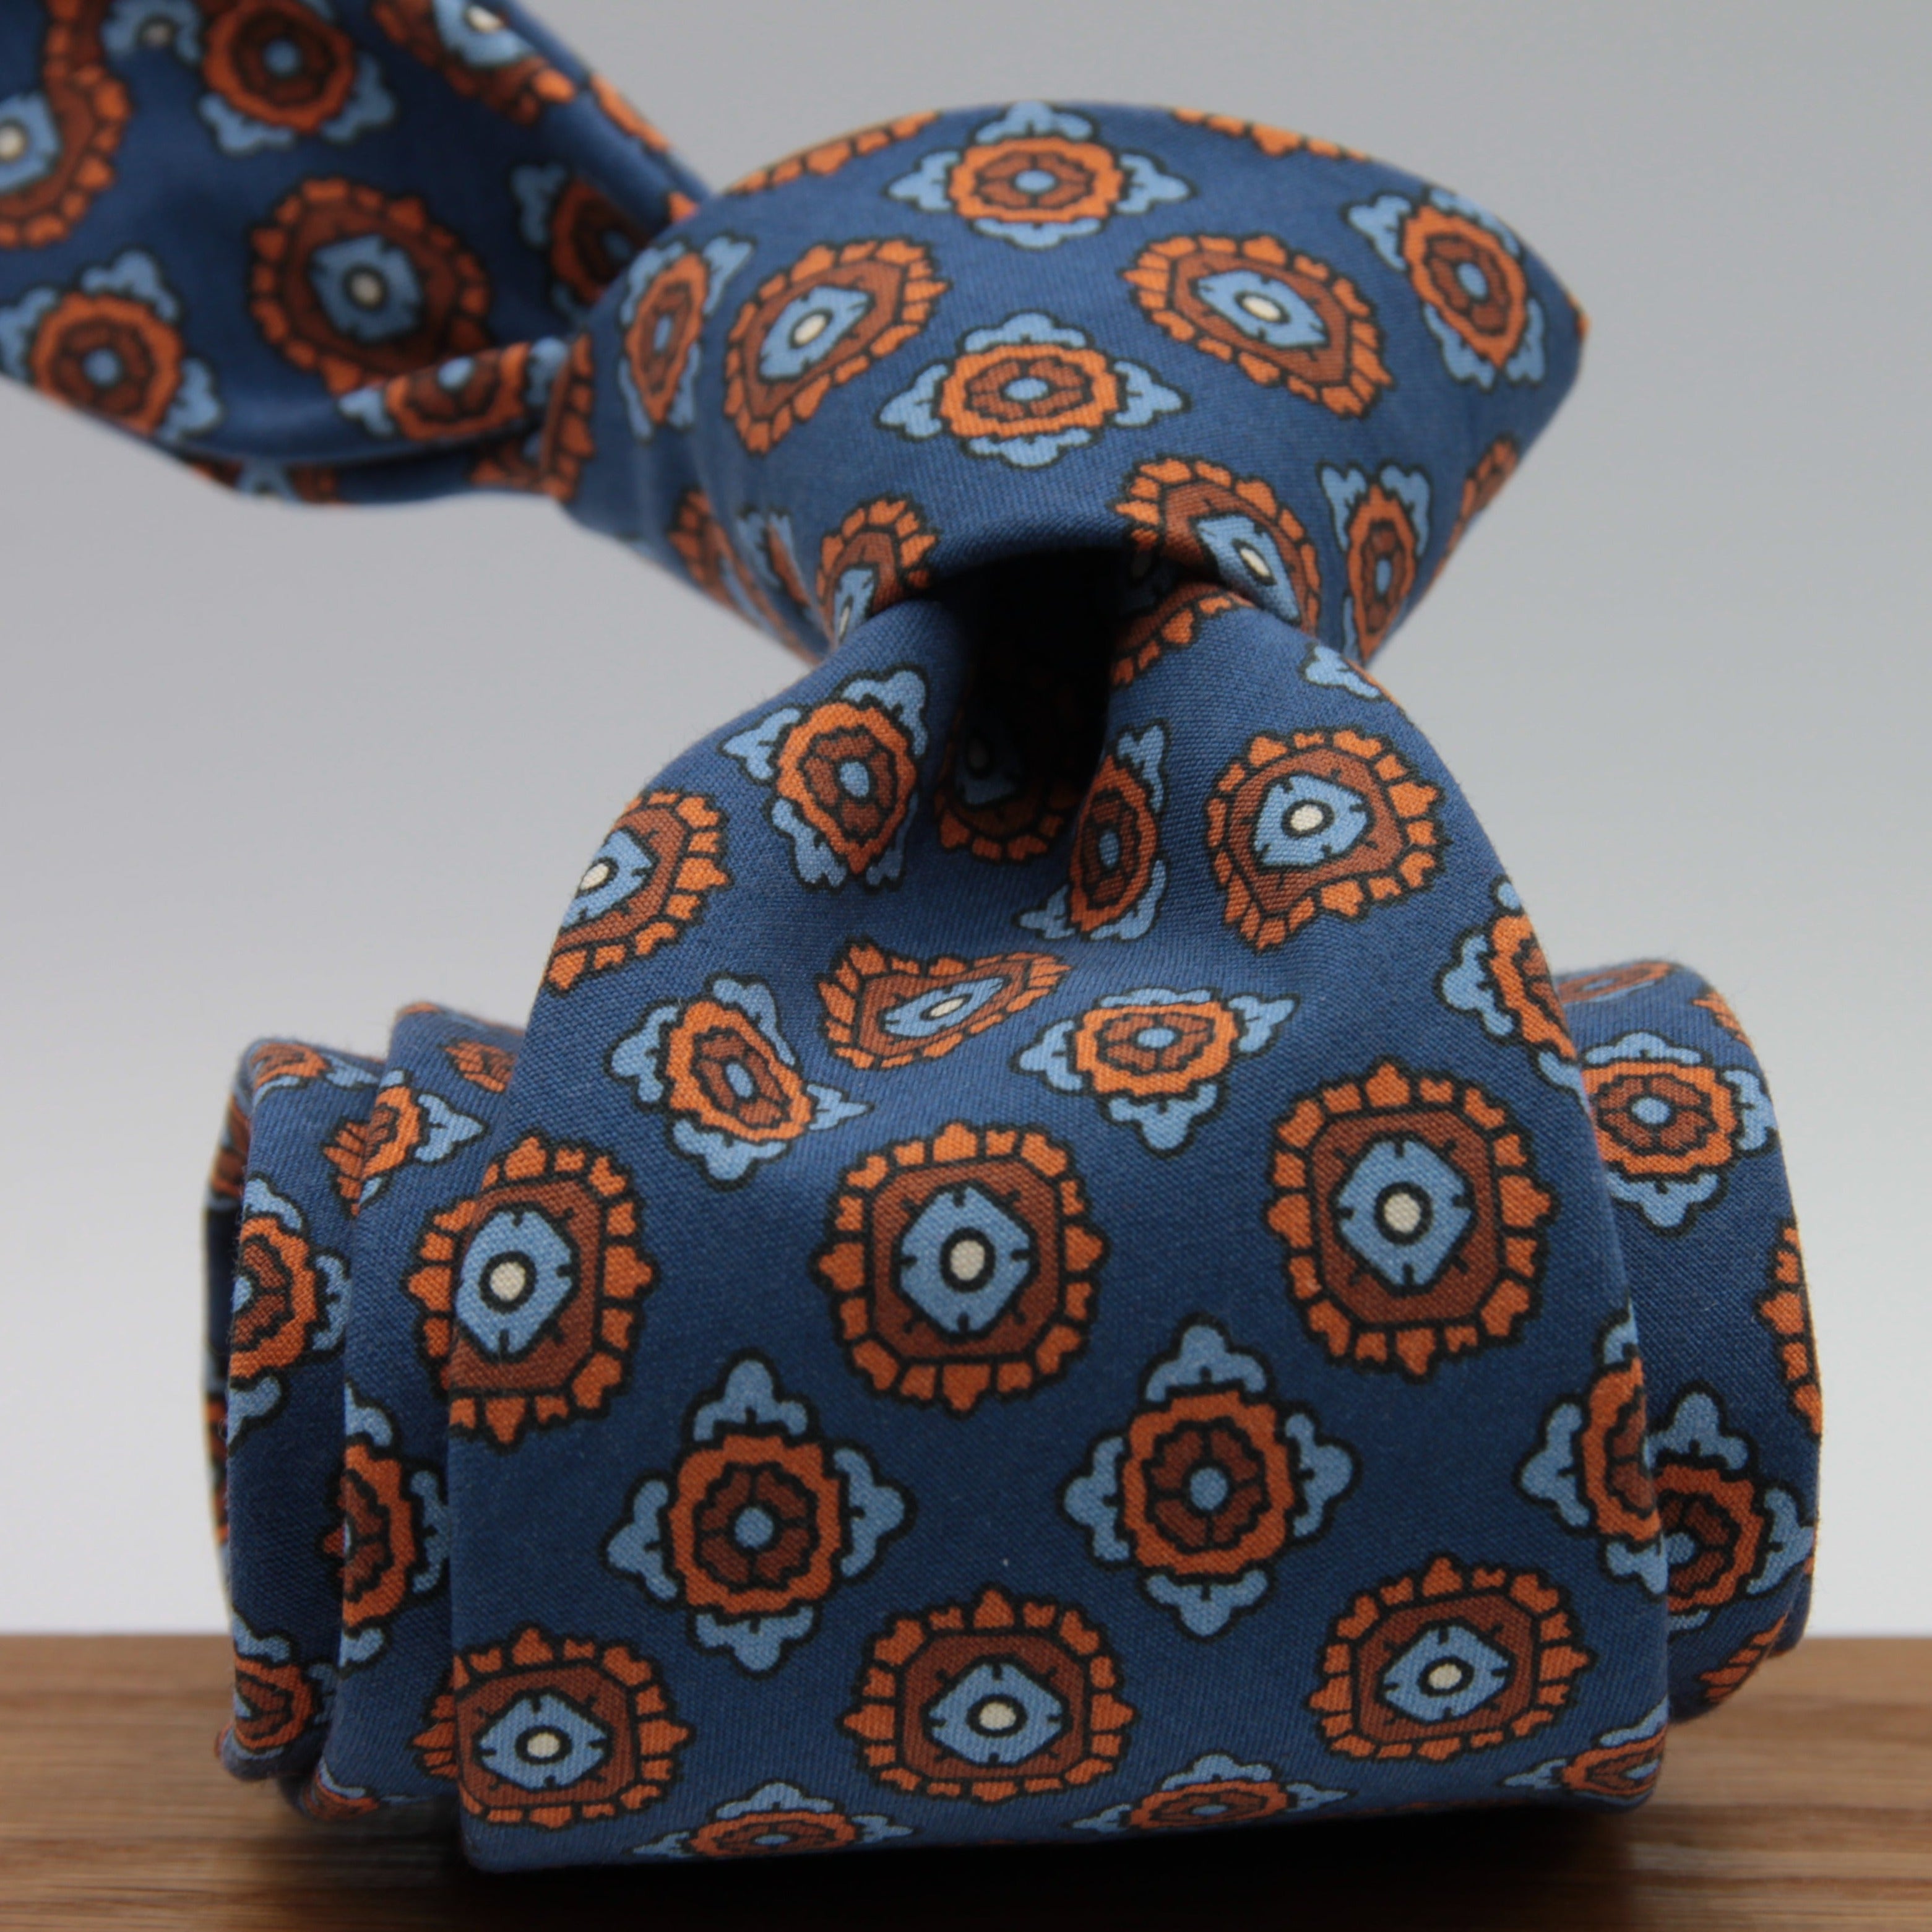 Cruciani & Bella 100% Printed Madder Silk  Italian fabric Unlined tie Blue, Orange and Brown Motifs Tie Handmade in Italy 8 cm x 150 cm #7617